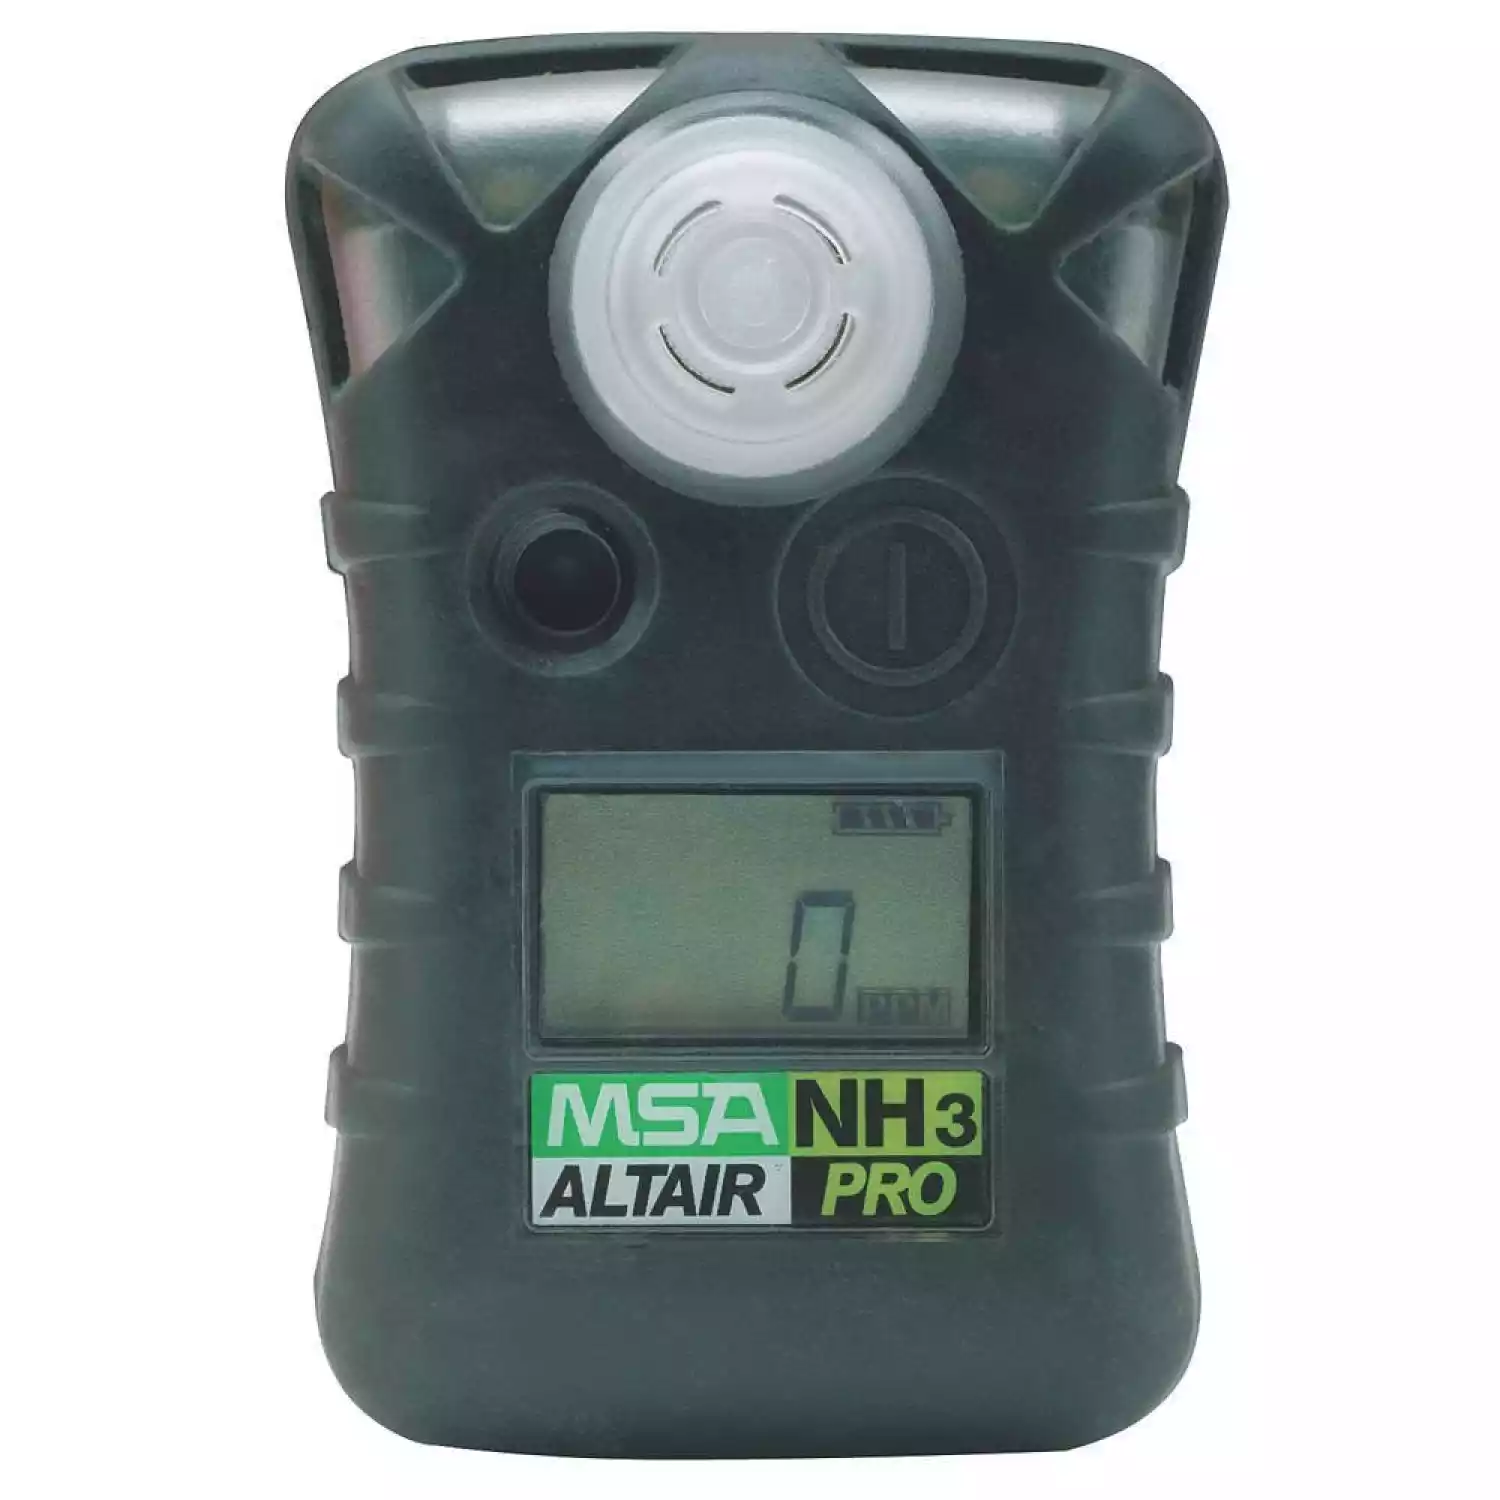 ALTAIR PRO NH3 газоанализатор, пороги тревог: 20 мг/м3 и 40 мг/м3 - 1